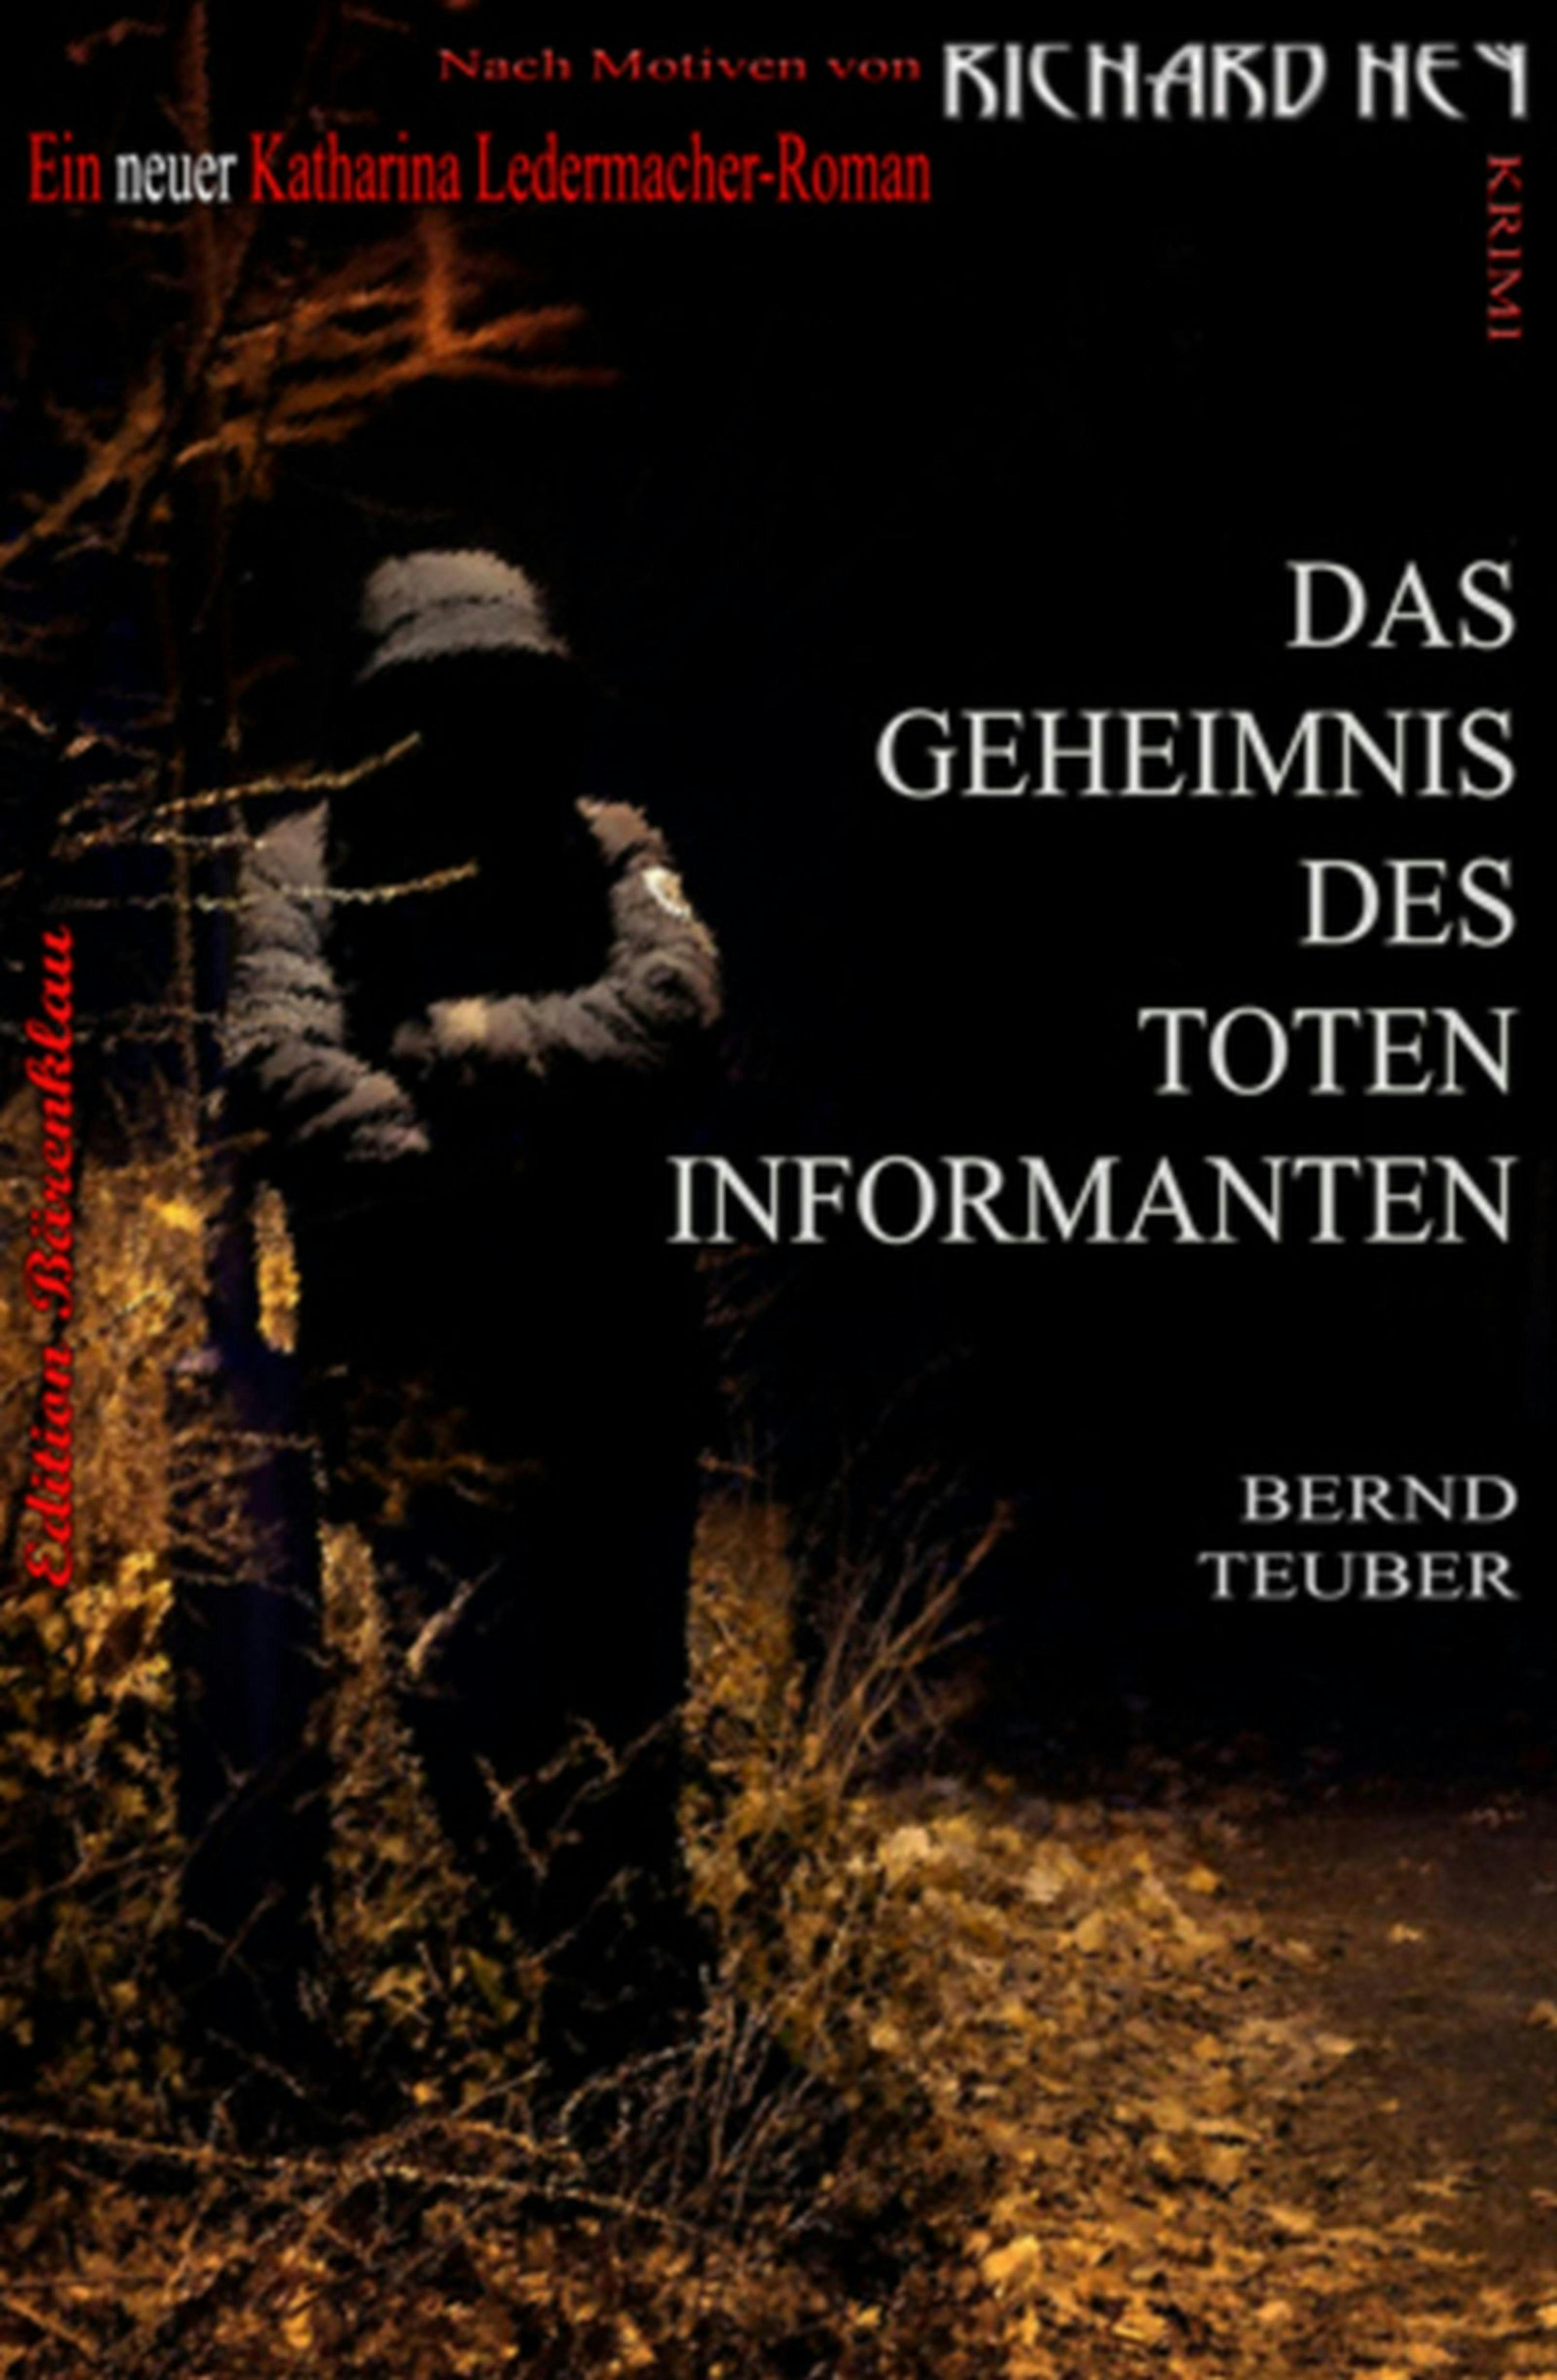 Das Geheimnis des toten Informanten - Richard Hey, Bernd Teuber